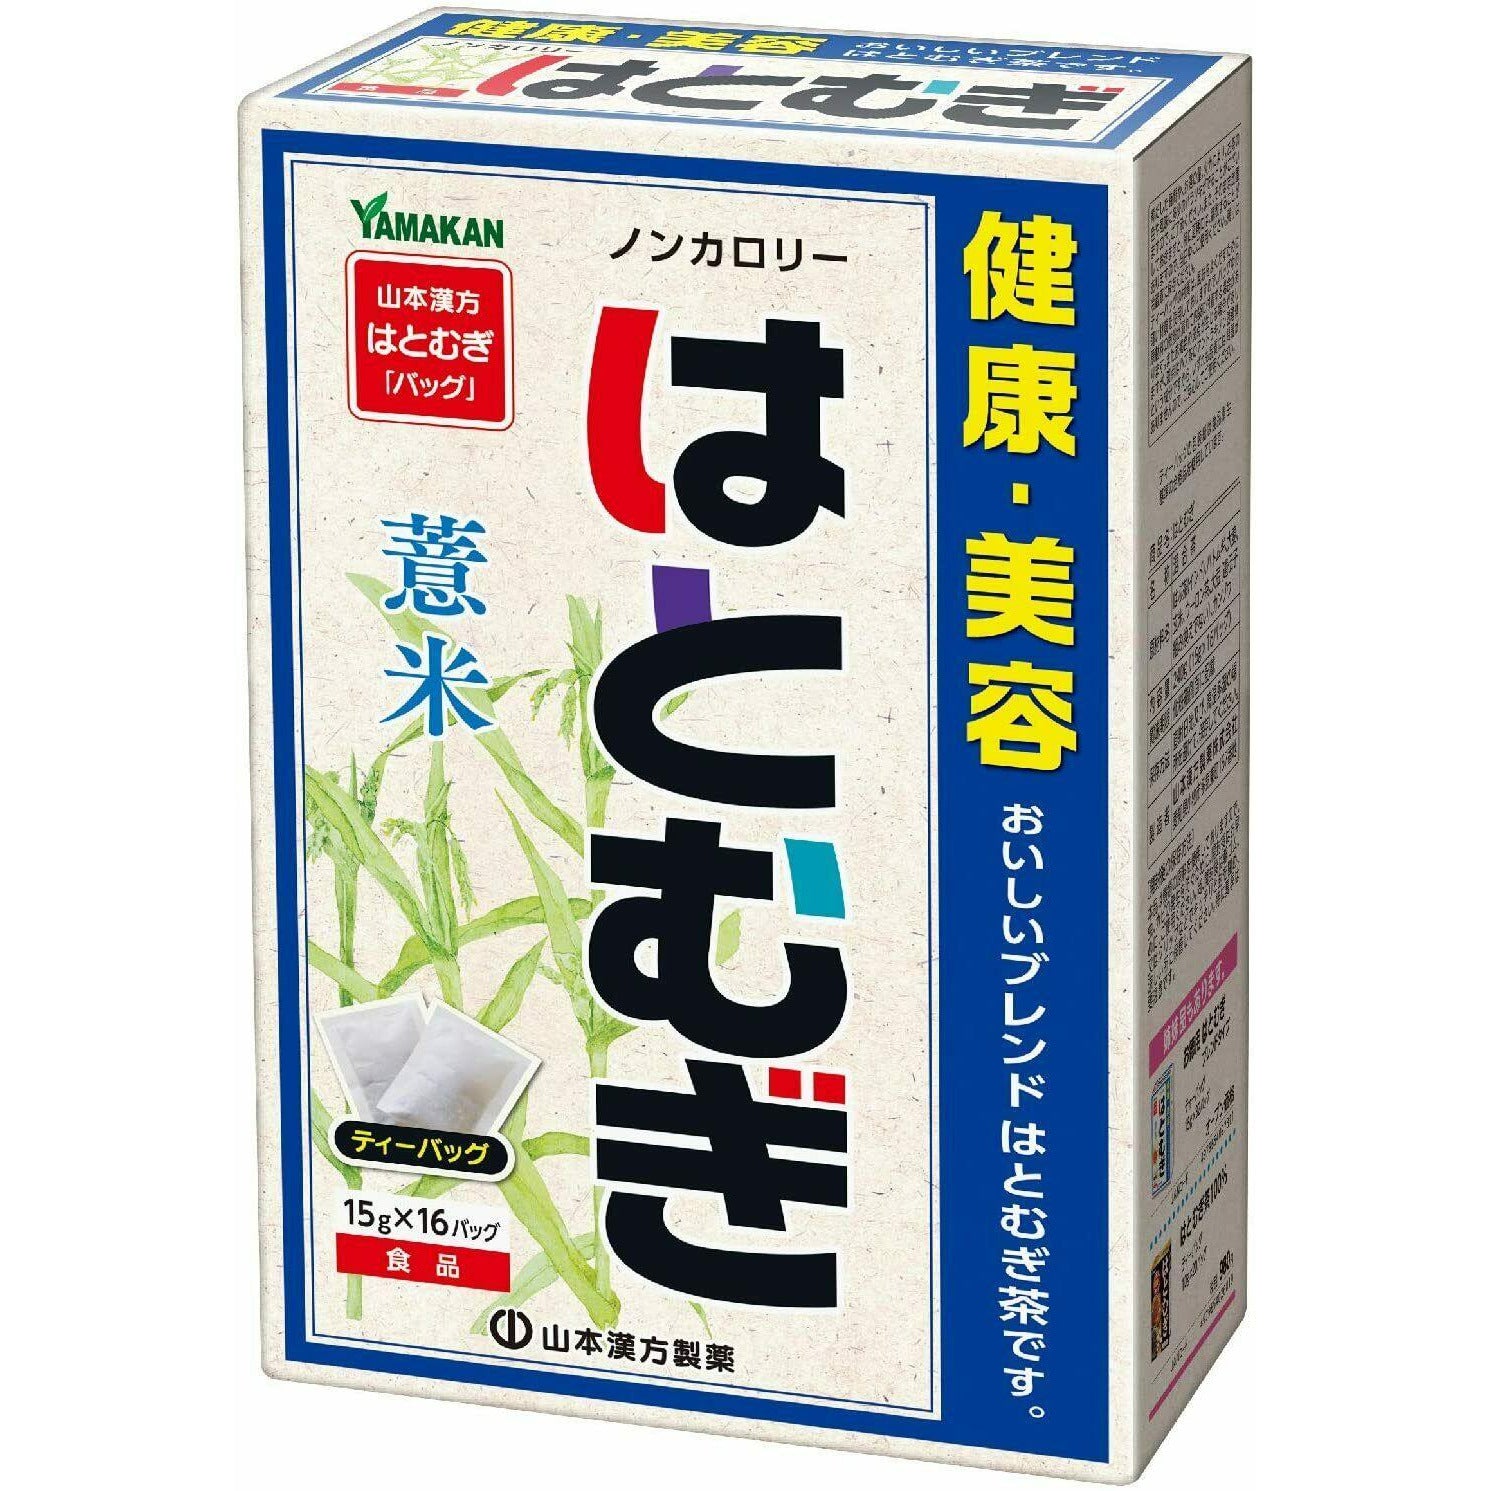  Yamamoto Kanpo Job's tears tea 15g x 16 packets Zero calories